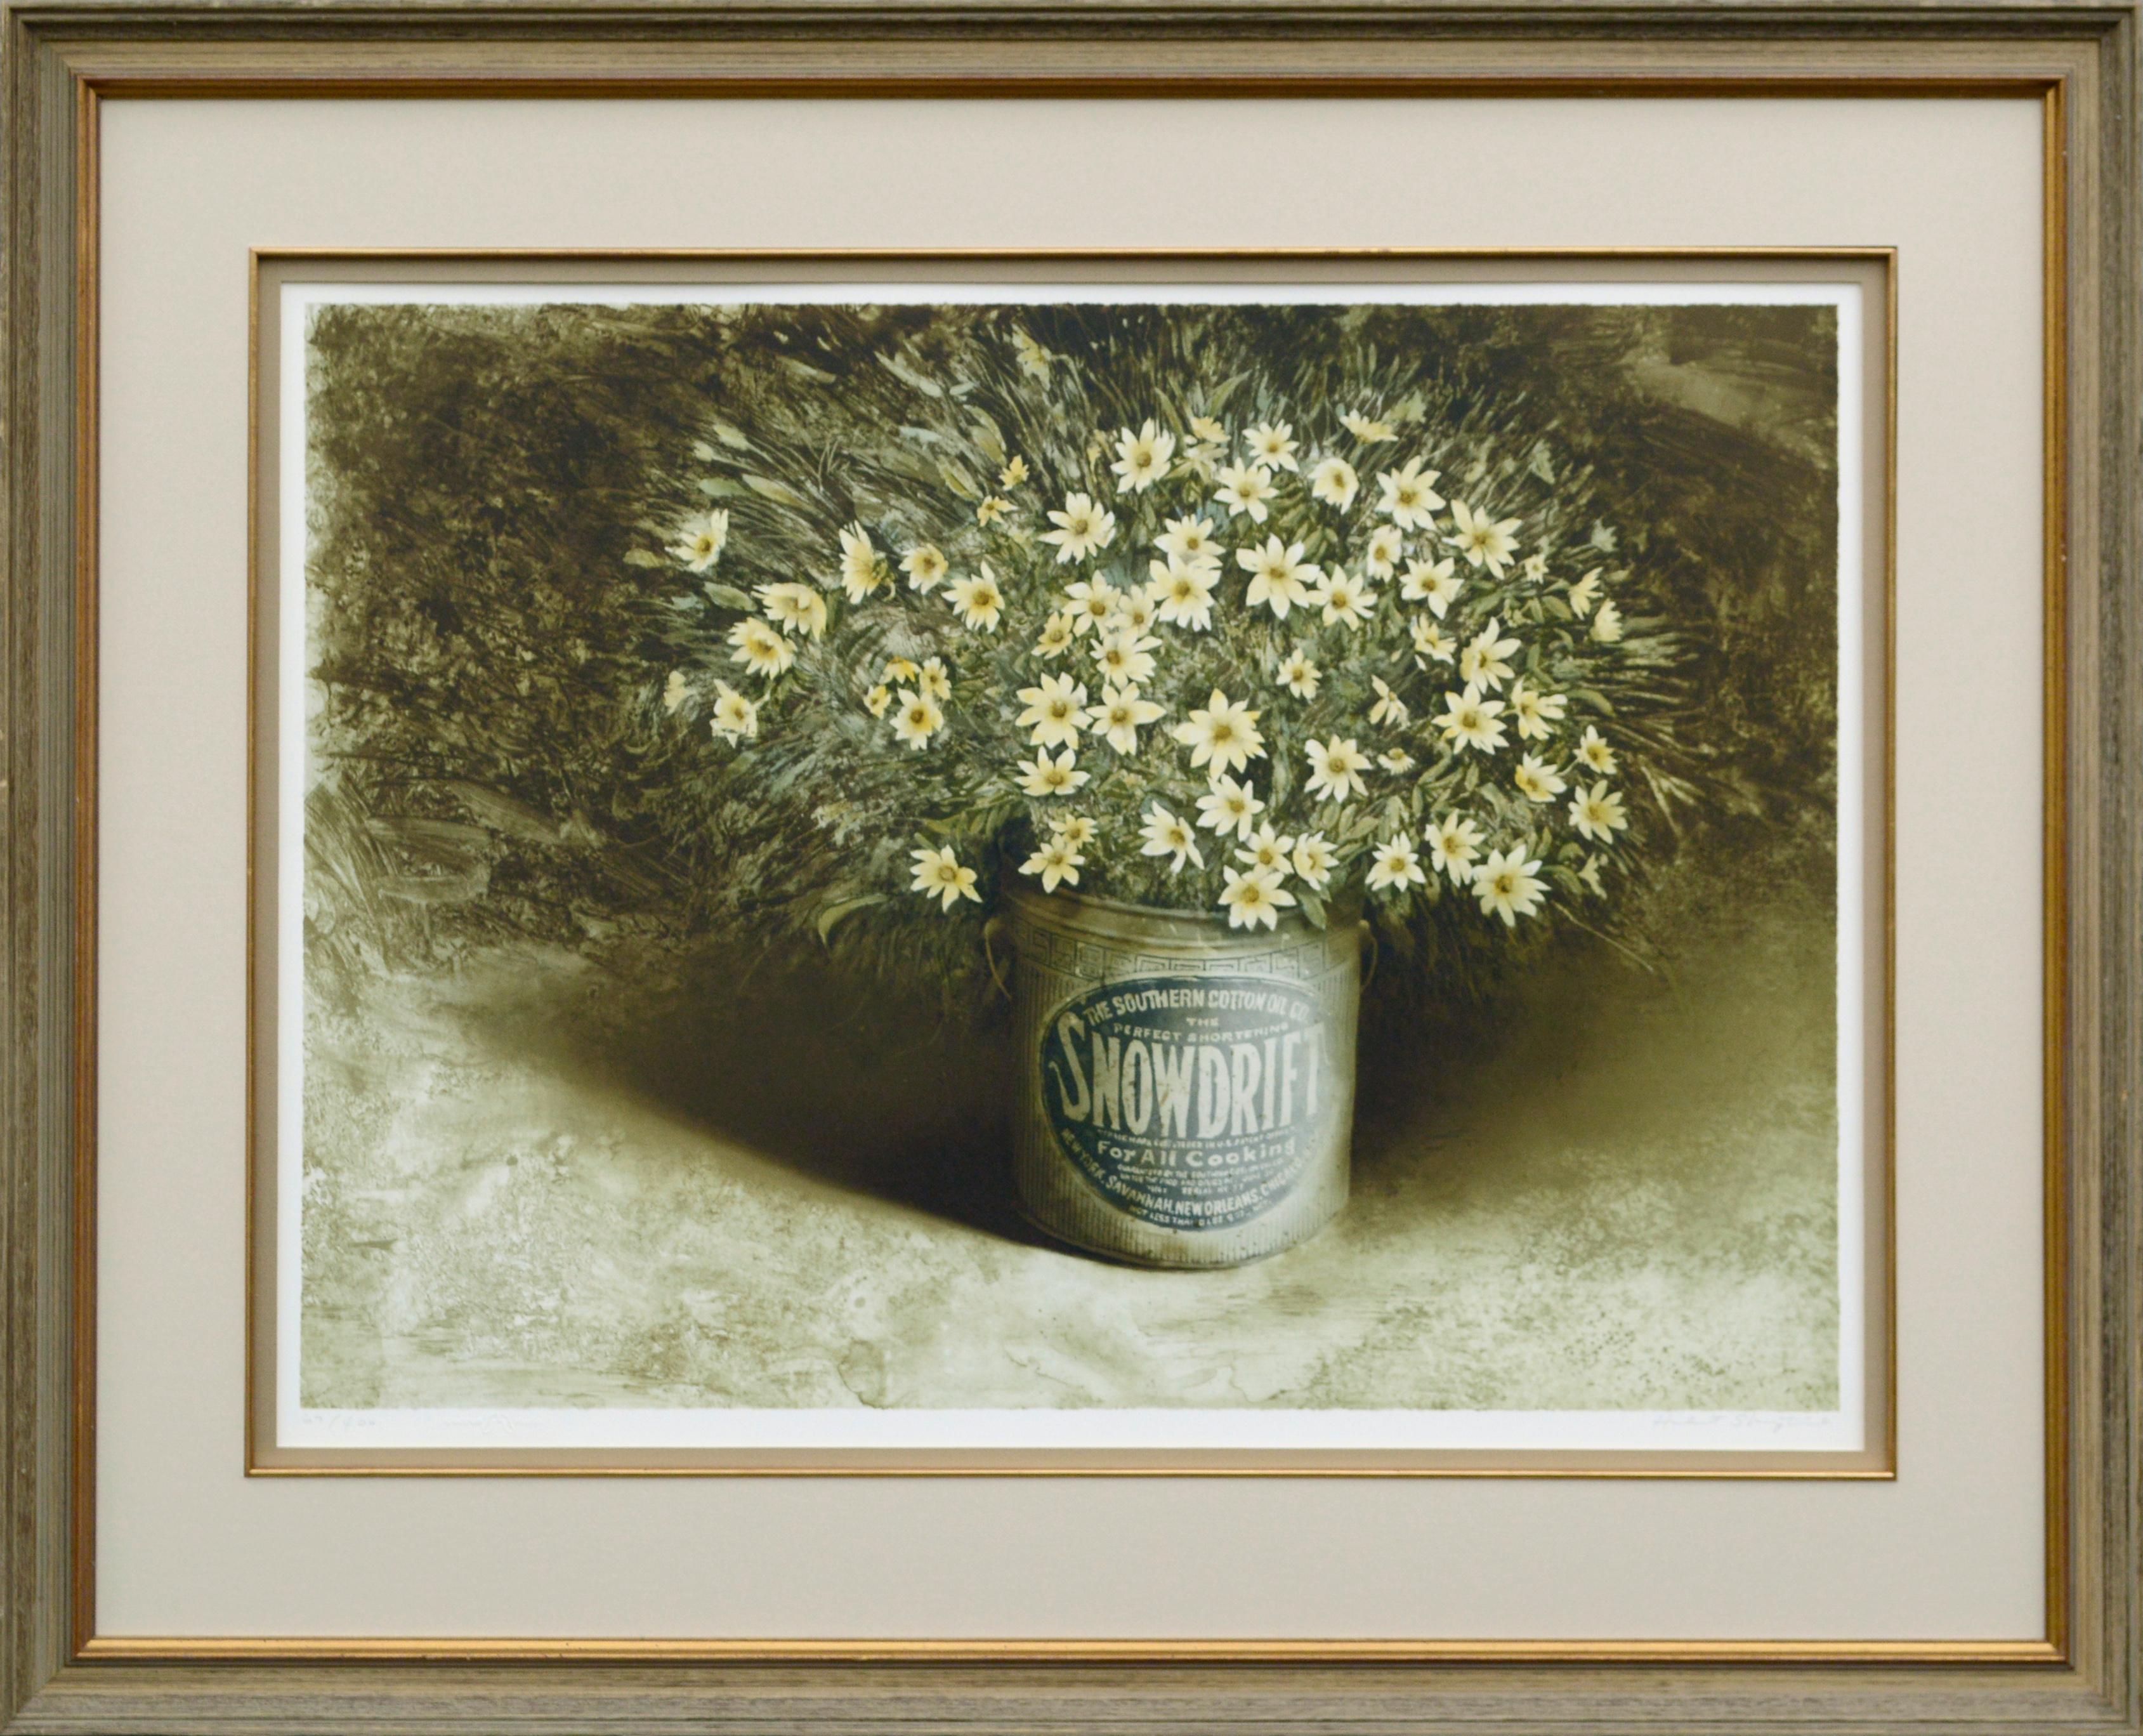 Hubert Shuptrine Still-Life Print - "Mountain Boquet" - Wildflowers in Snowdrift Shortening Can